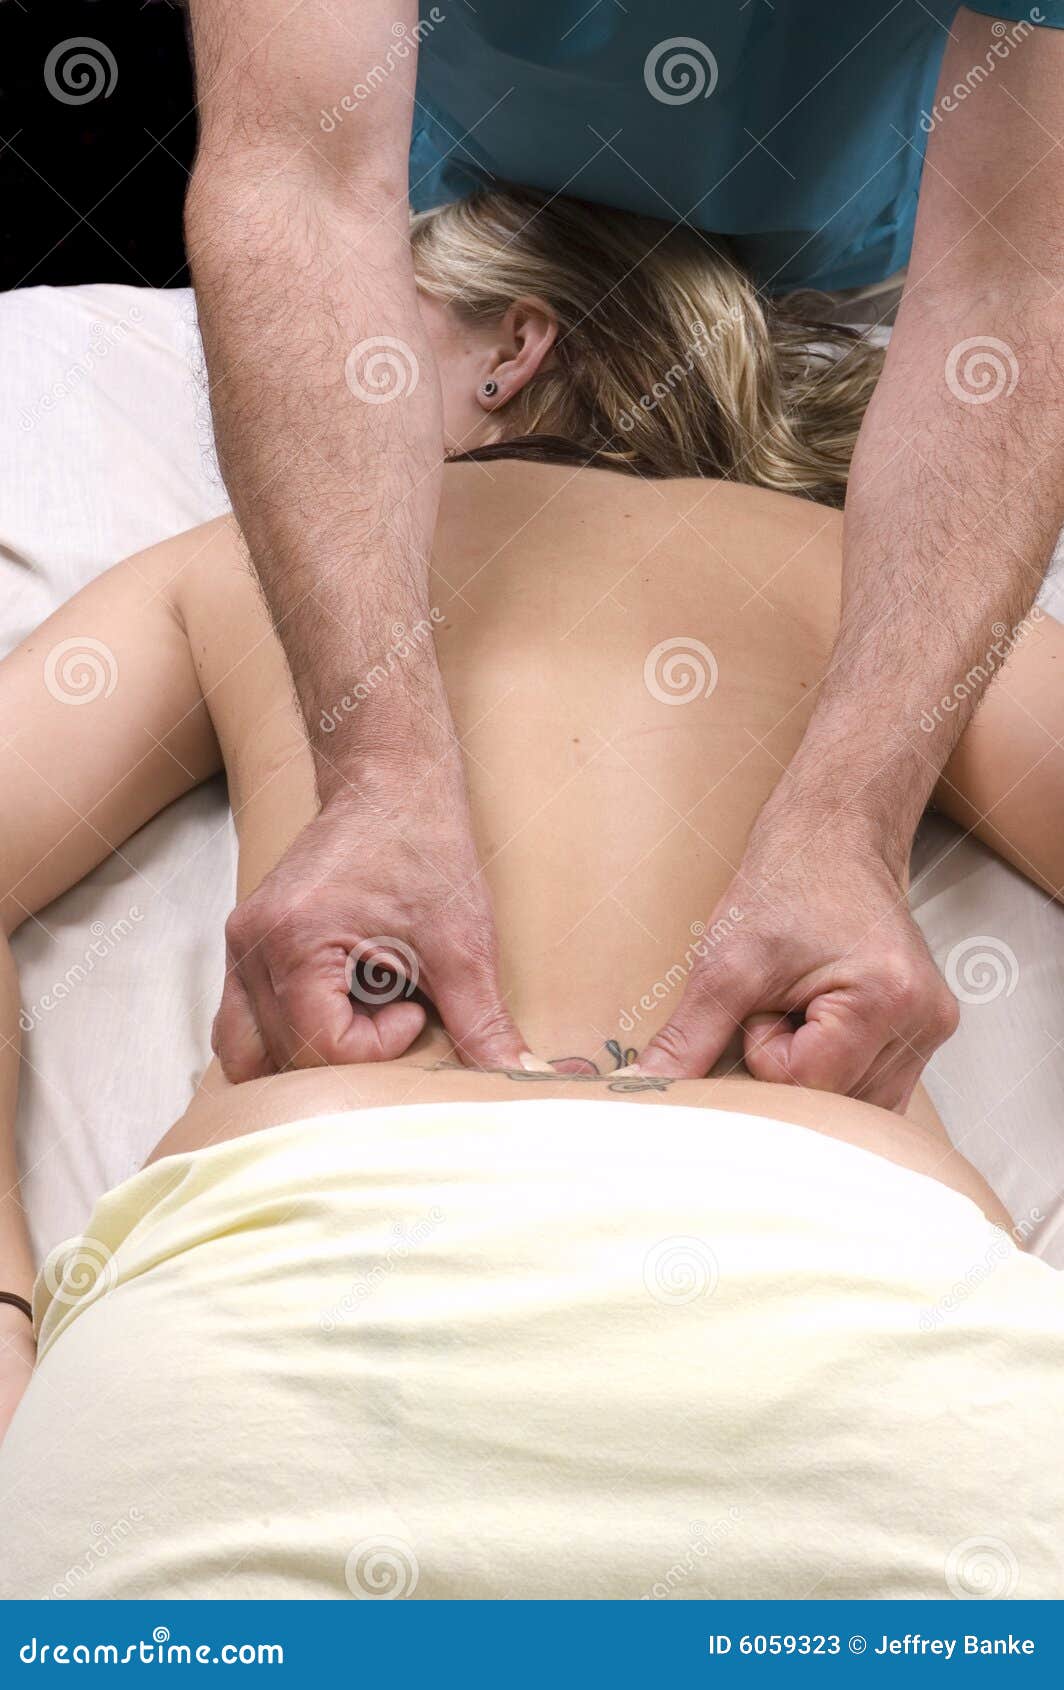 woman having back massage from masseur